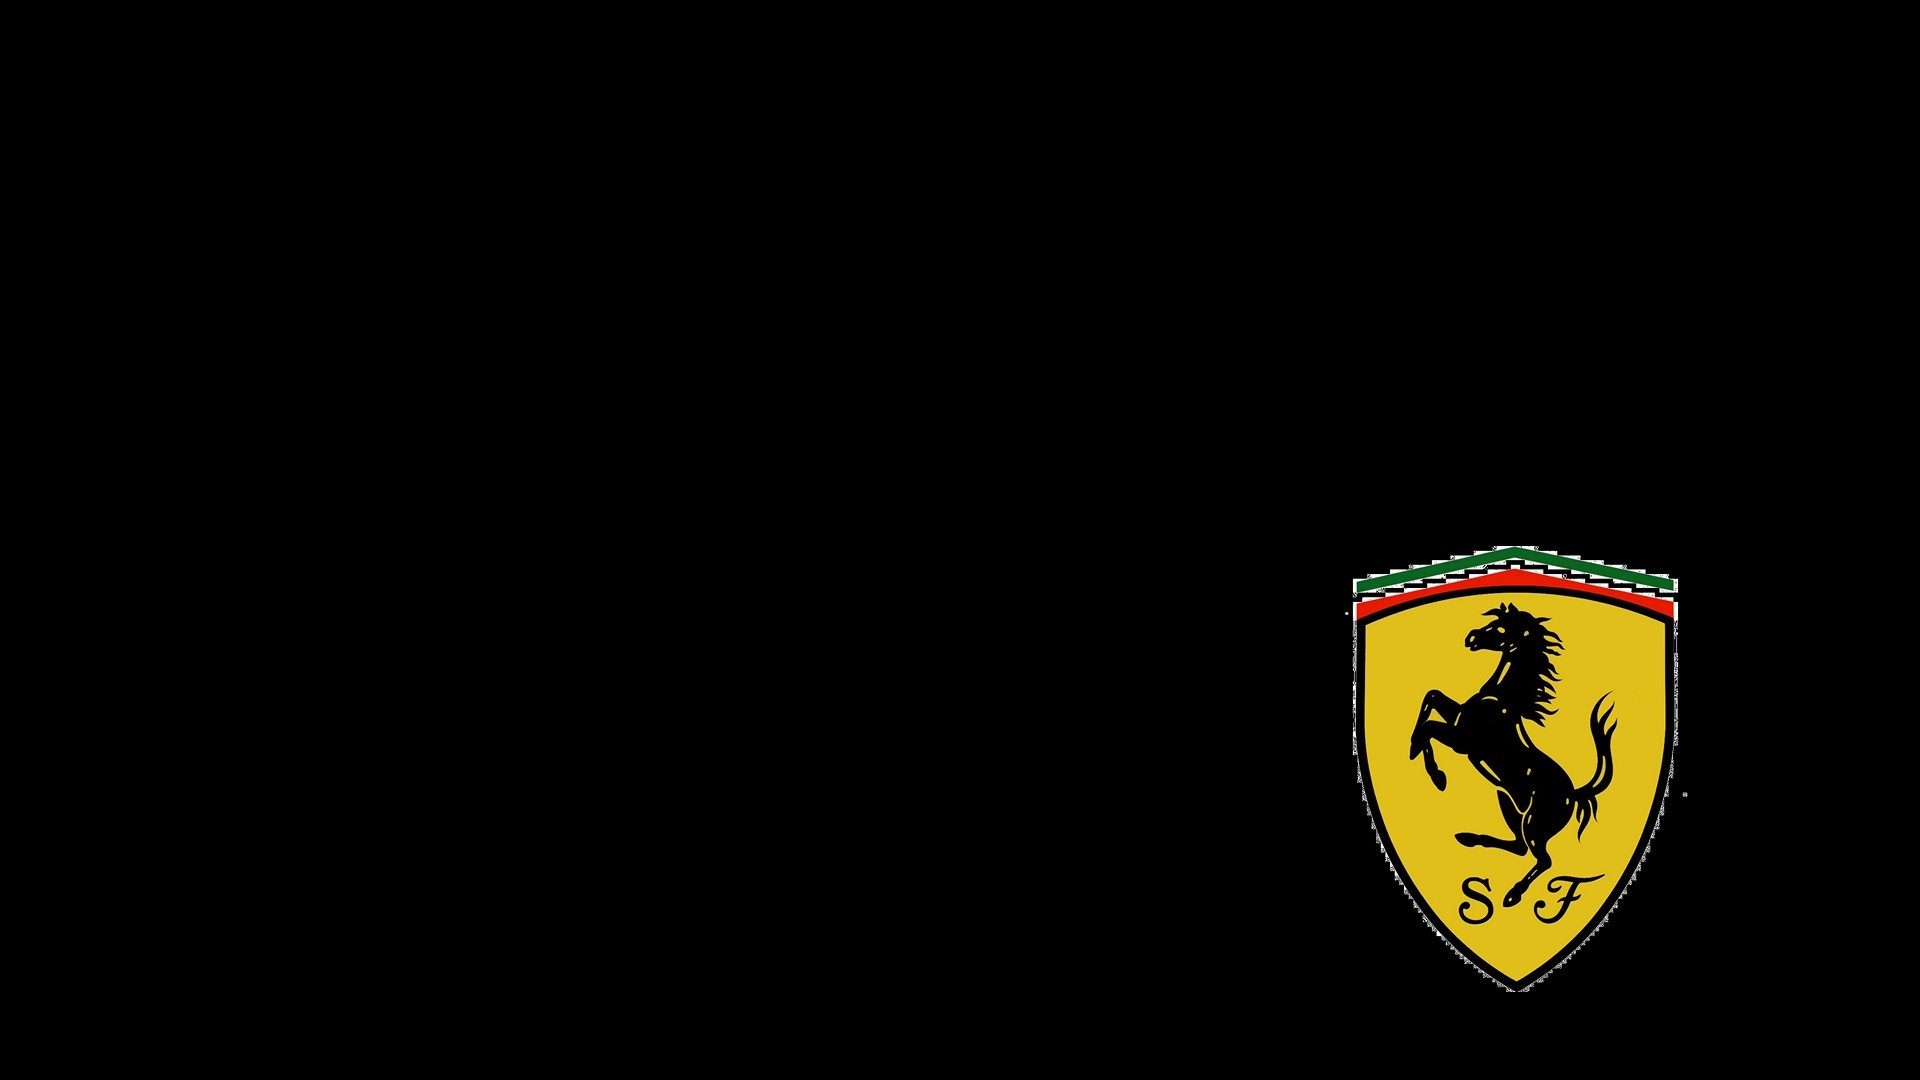 1920x1080 Ferrari-logo-hd-desktop-wallpapers